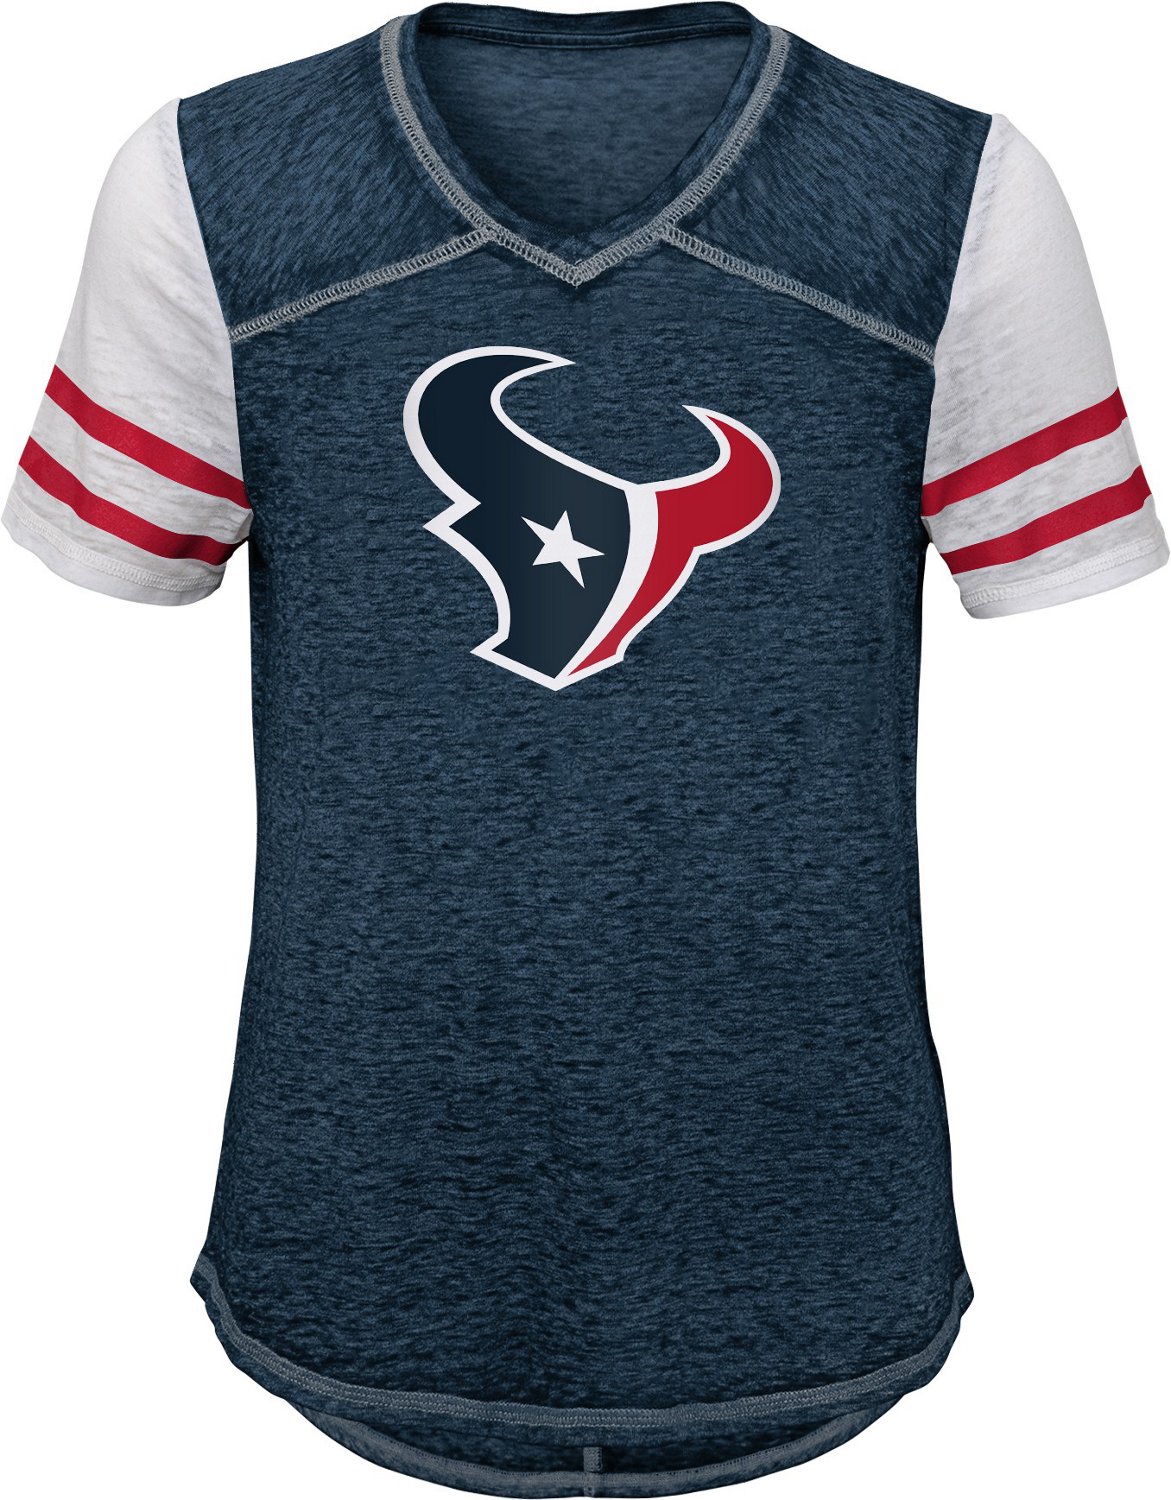 Outerstuff Youth Houston Texans Team Spirit Football Short Sleeve T-shirt